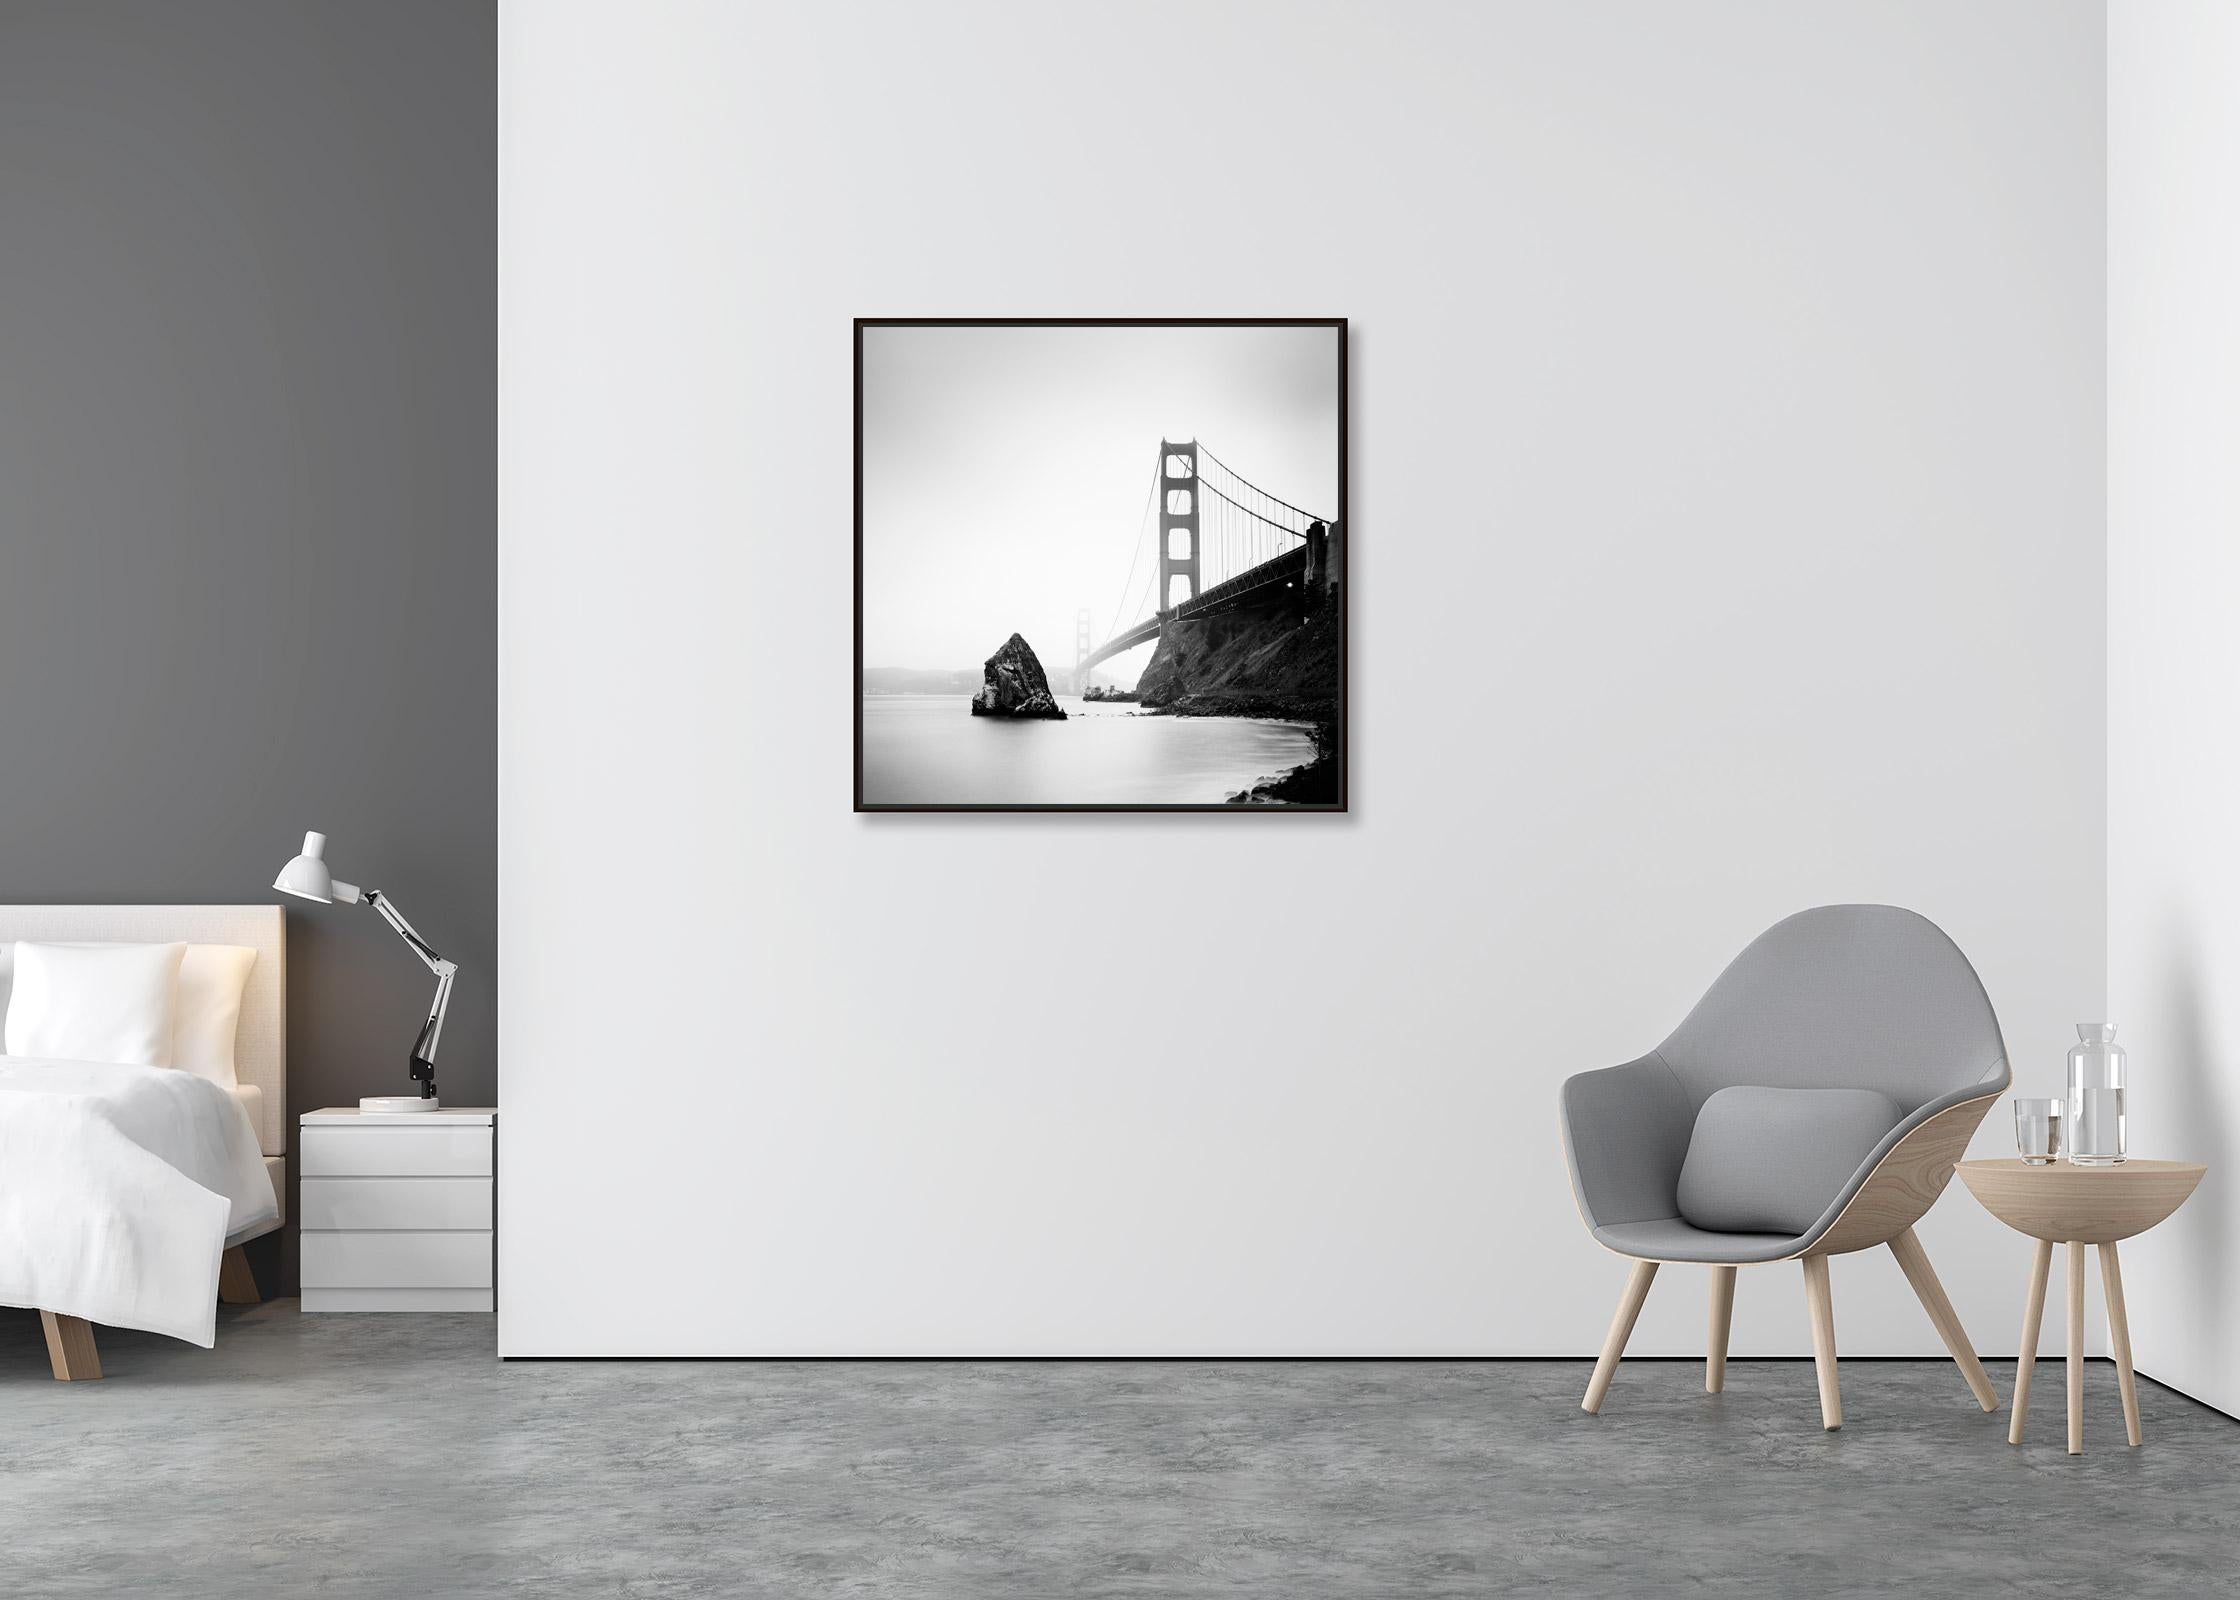 Golden Gate Bridge, fort point rock, San Francisco, b&w landscape photography - Contemporary Photograph by Gerald Berghammer